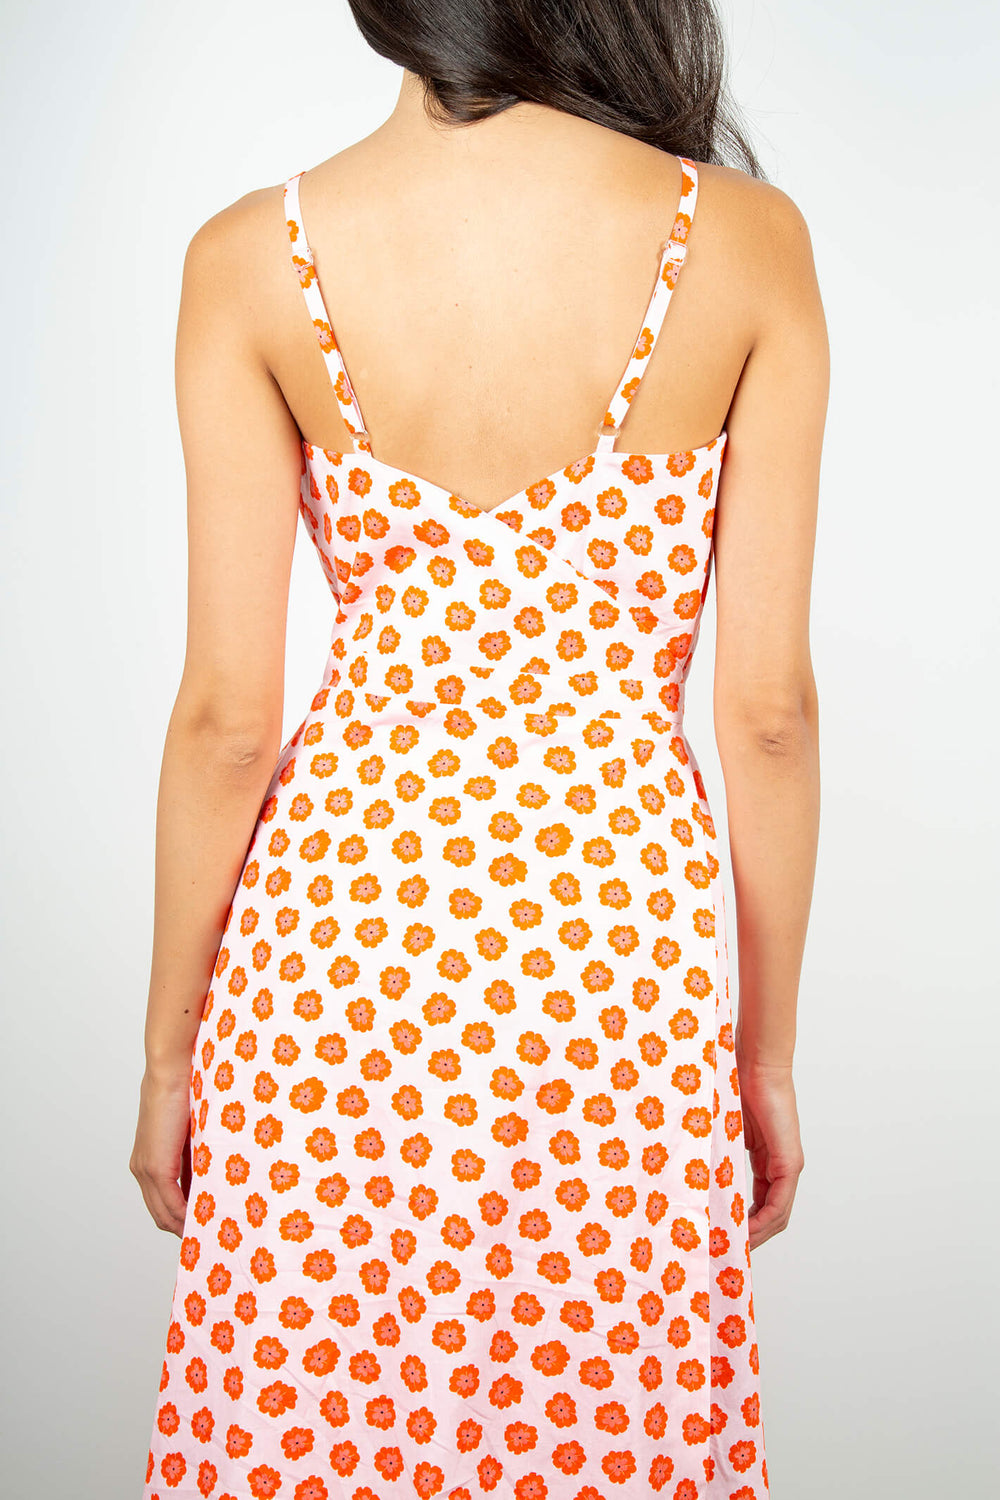 Primrose Park Sarah Jane Orange Poppy 03 Dress - Shirley Allum Boutique